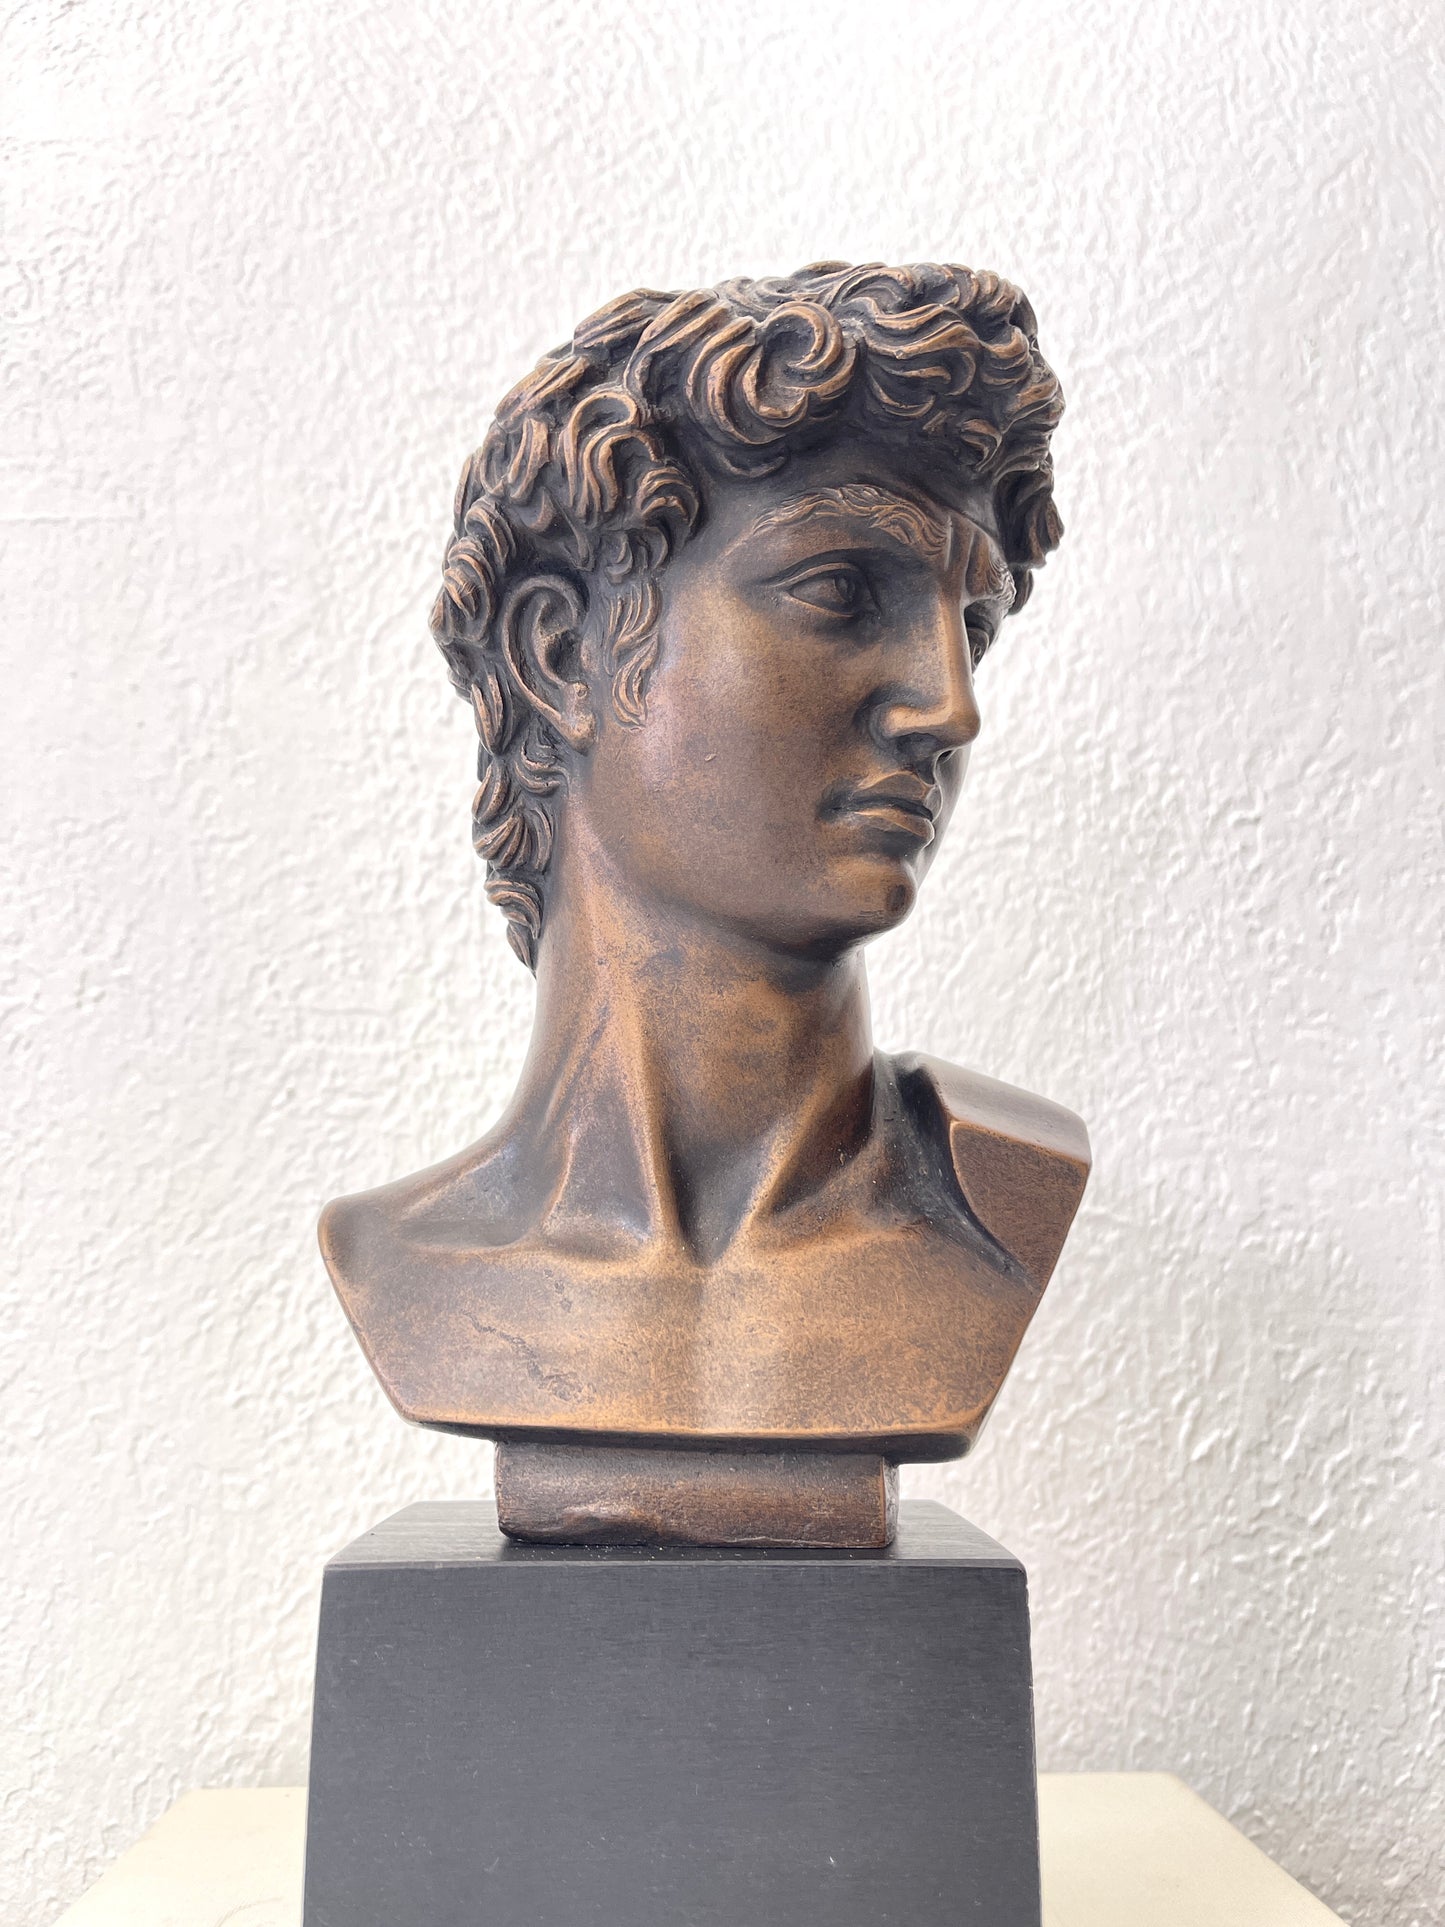 MCM signed Austin productions Inc Michaelangelo’s David bust bronzed resin statue